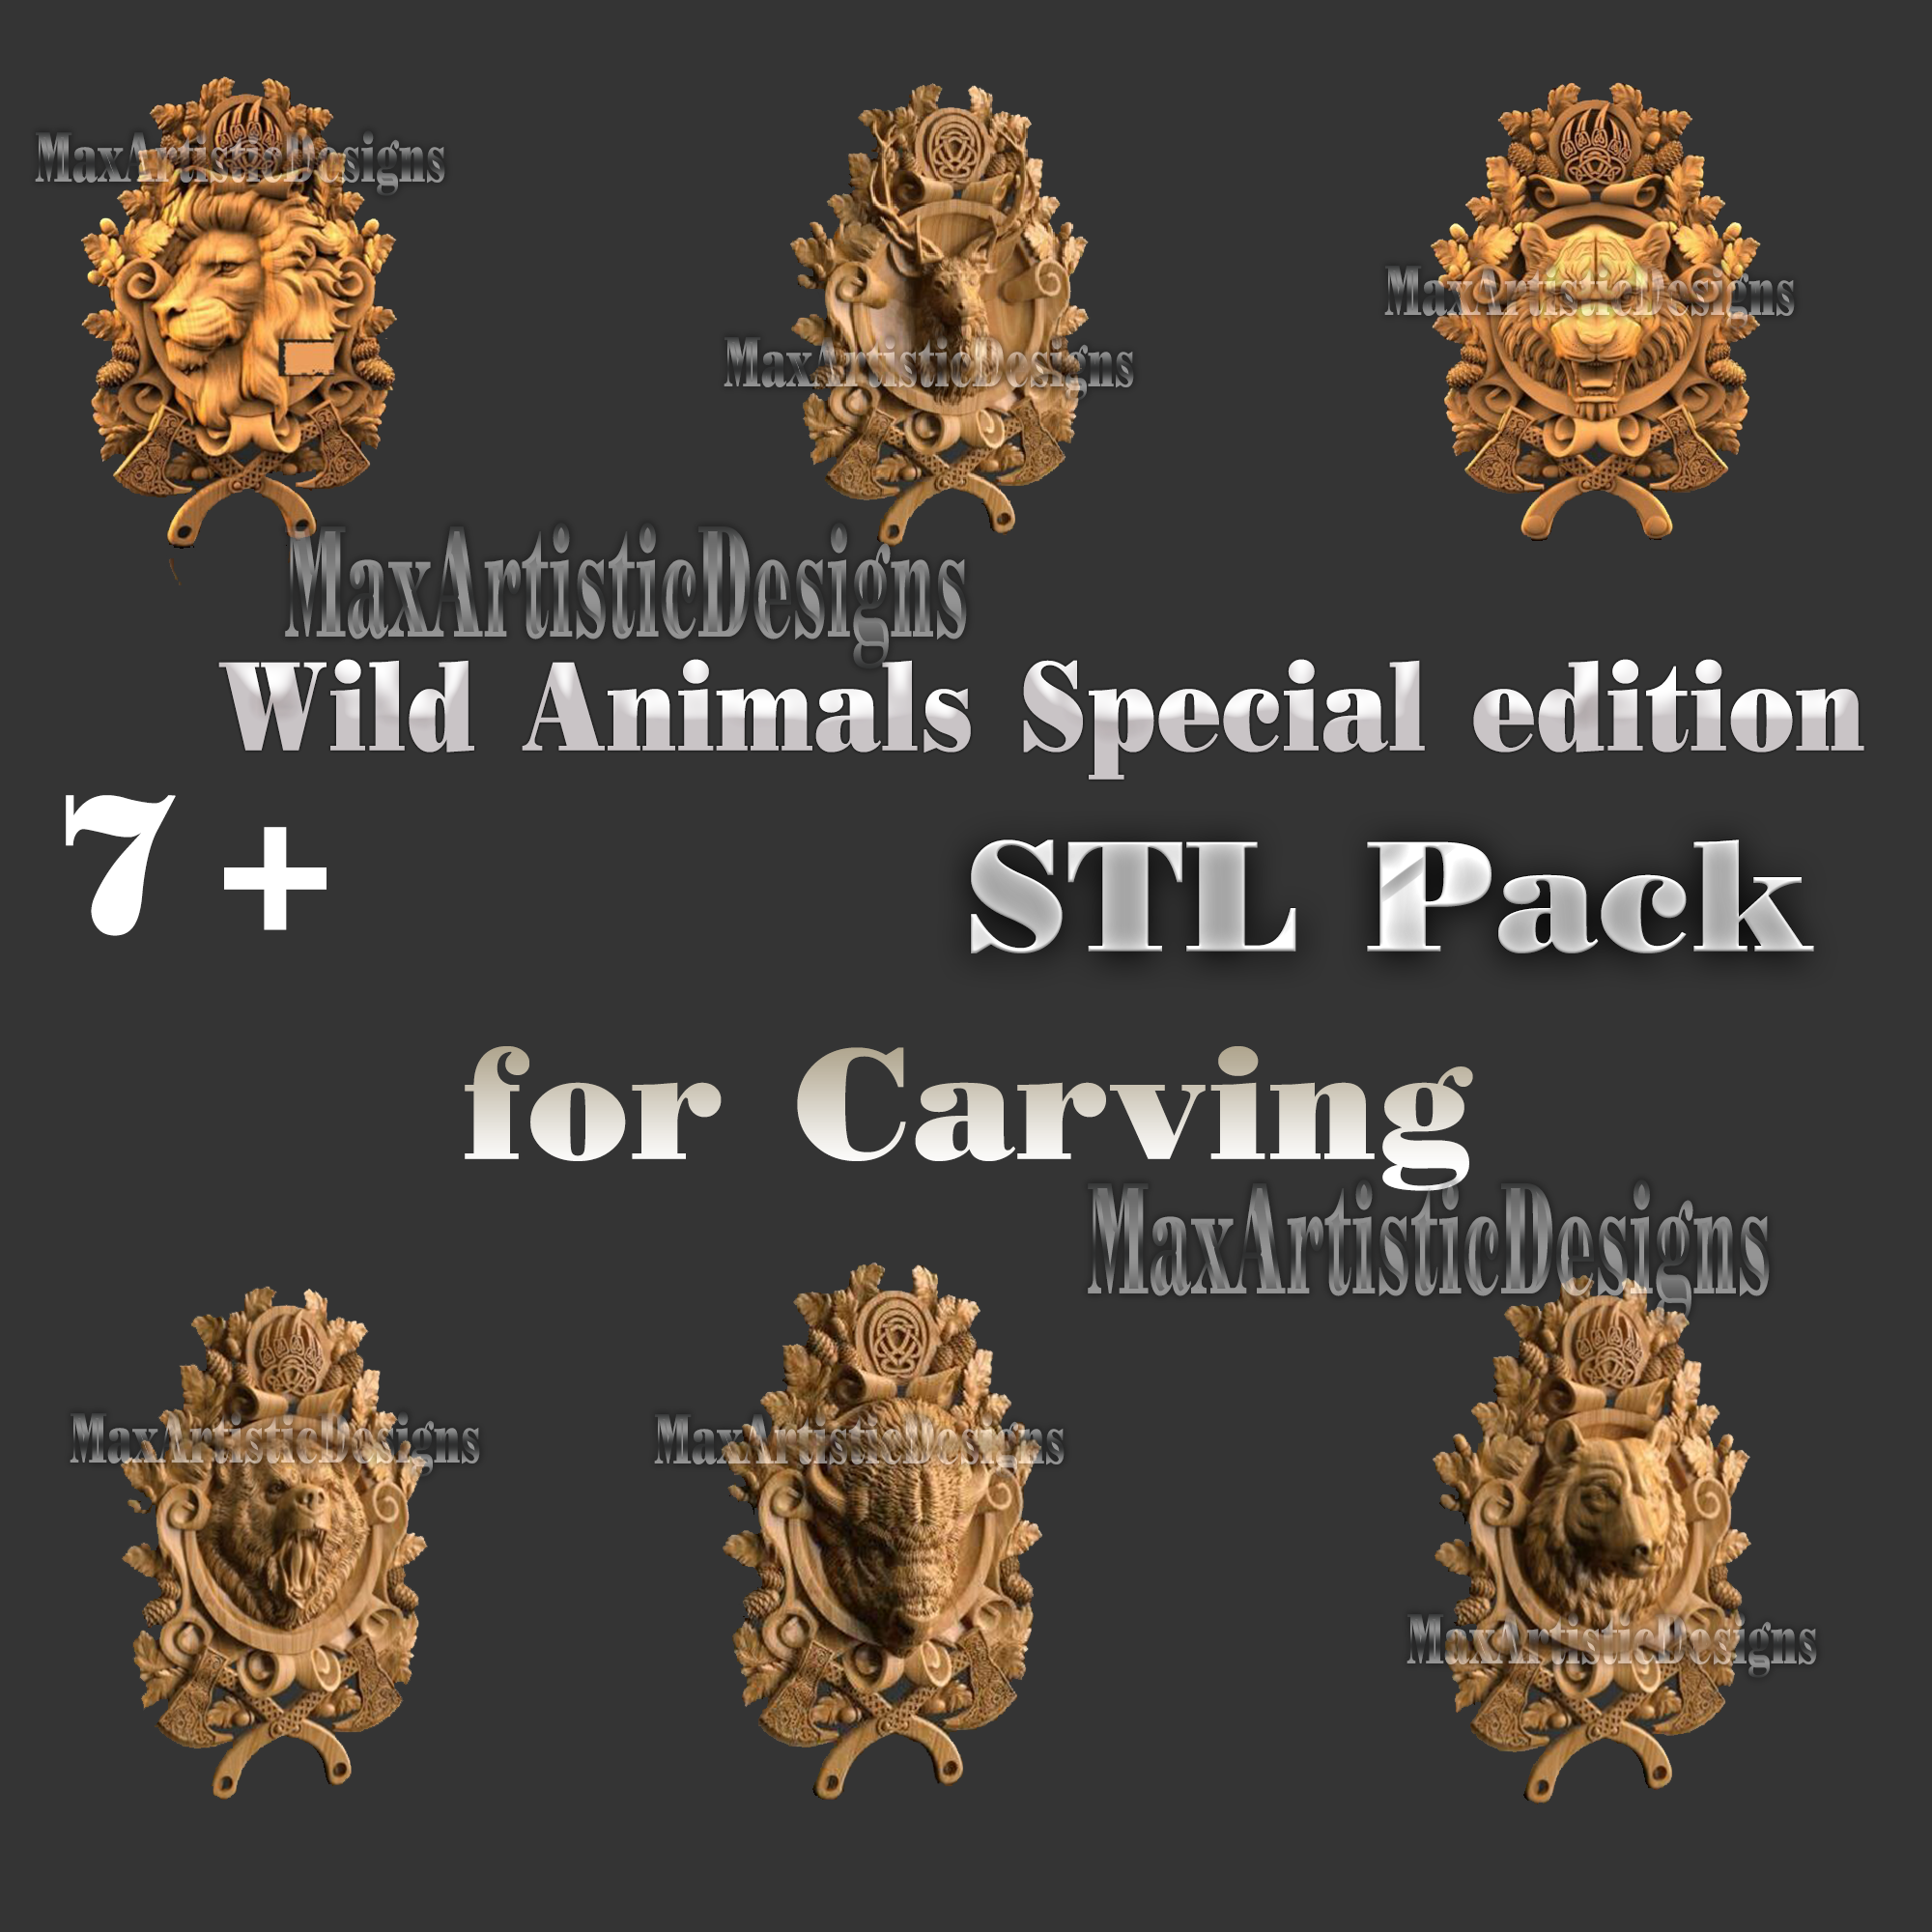 confezione da 8 modelli 3d stl di animali selvatici per incisione cnc, artcam, aspire e download digitale cut3d